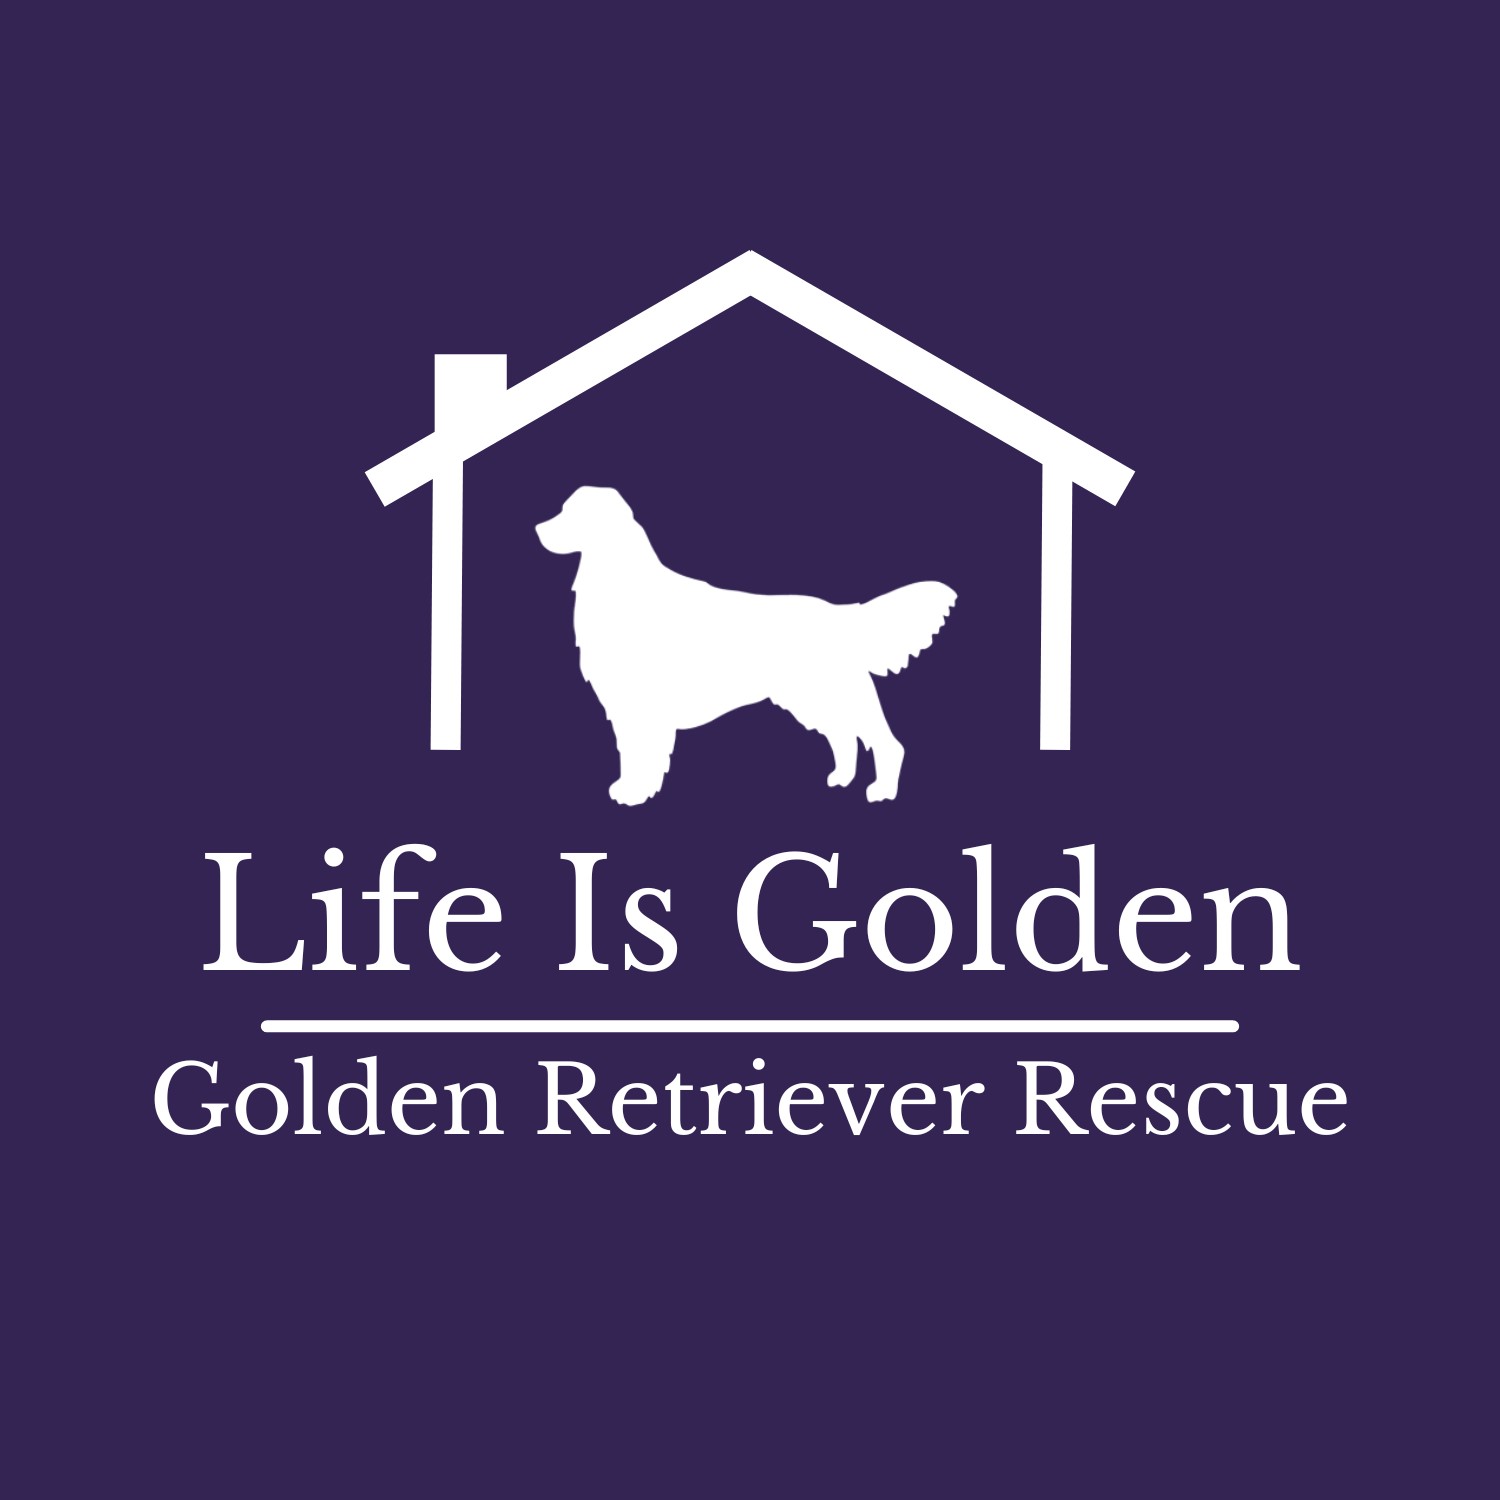 Life is Golden, Golden Retriever Rescue